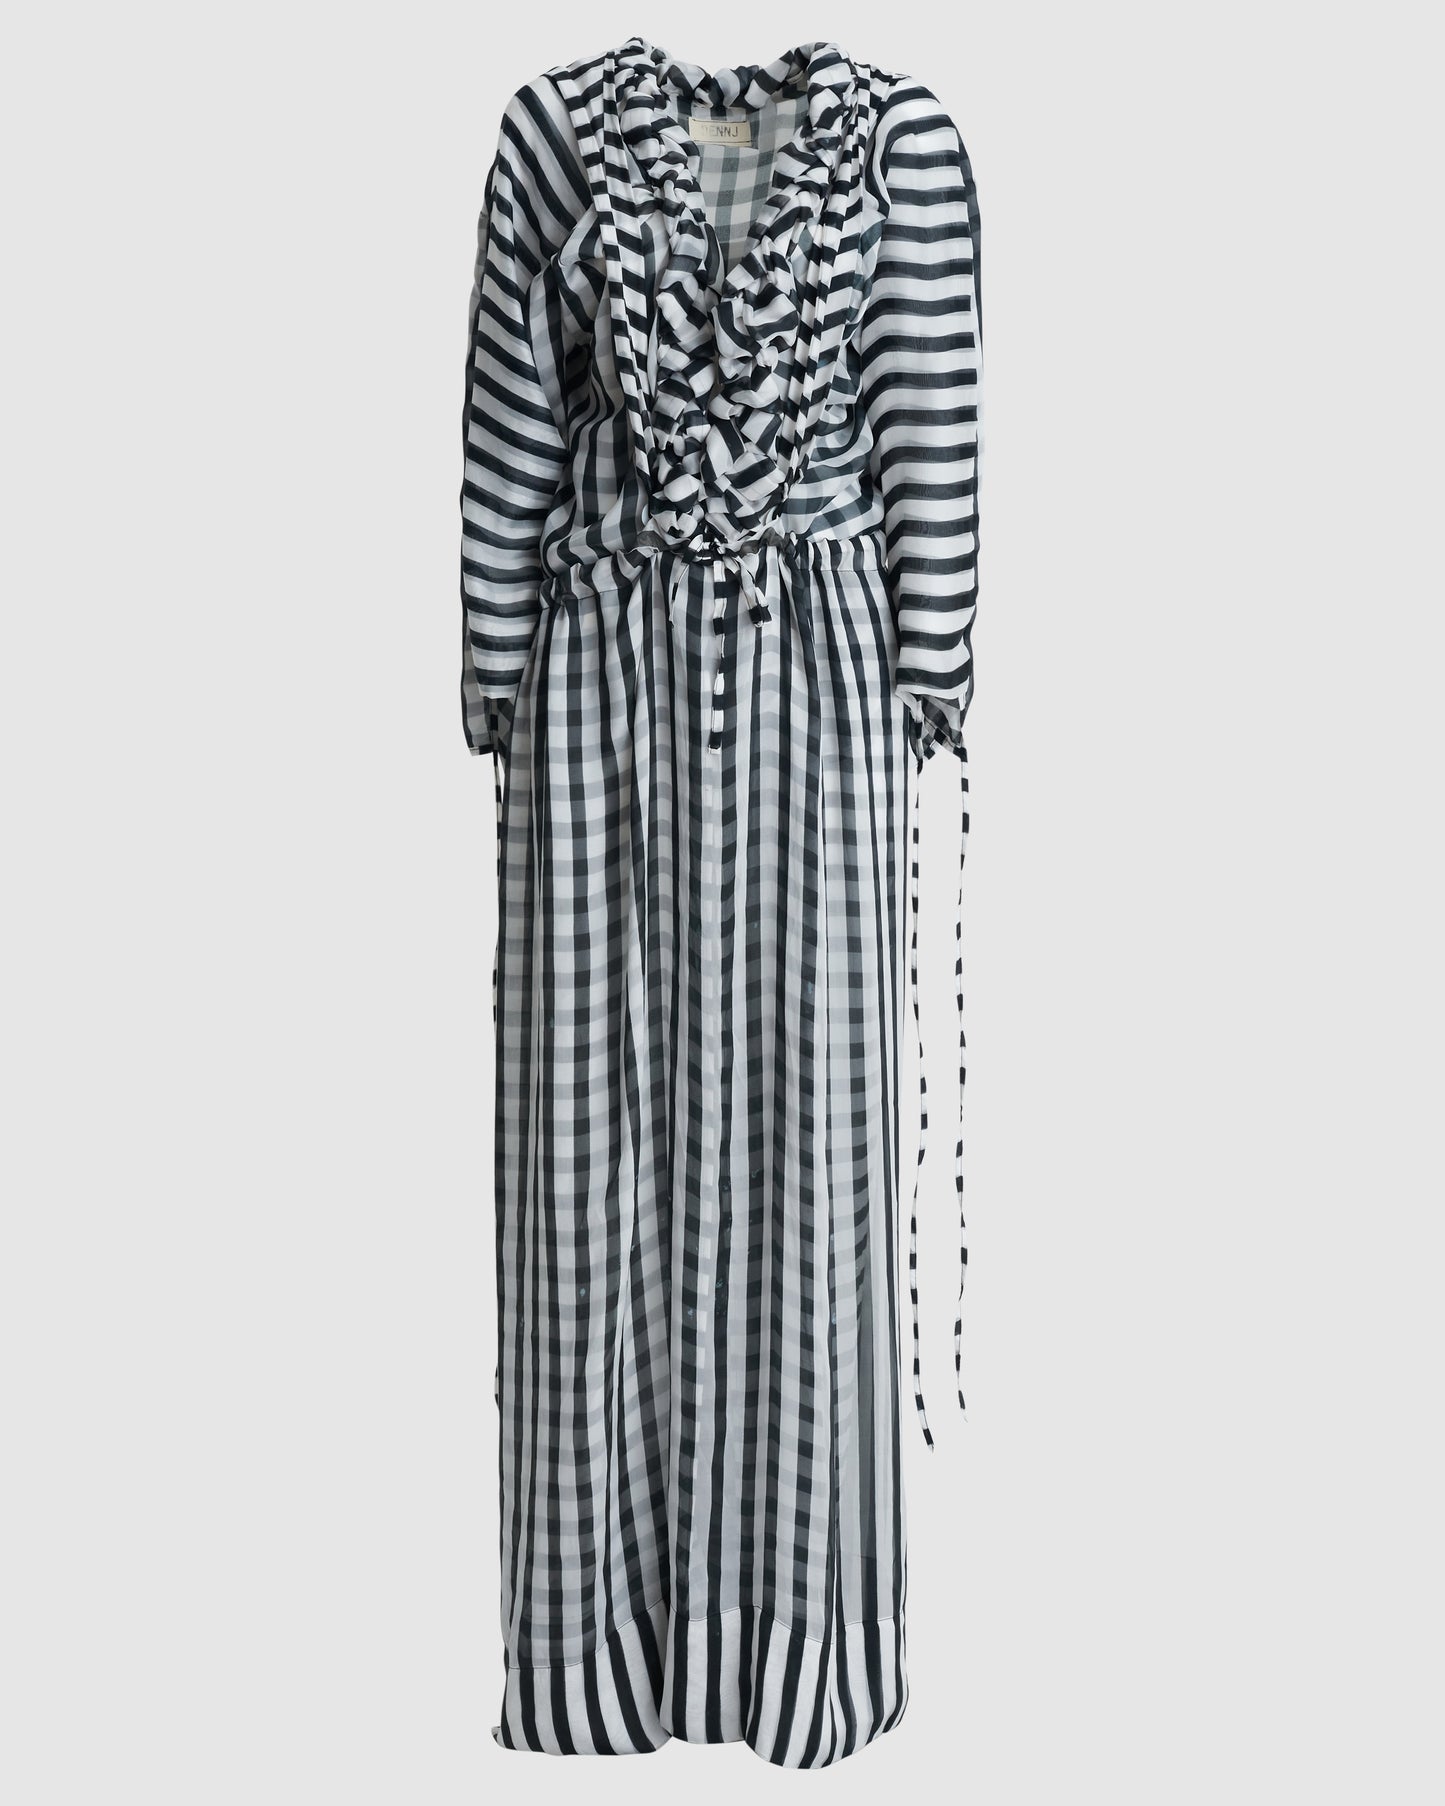 Datura Overalls Manteau and Shirt Dress